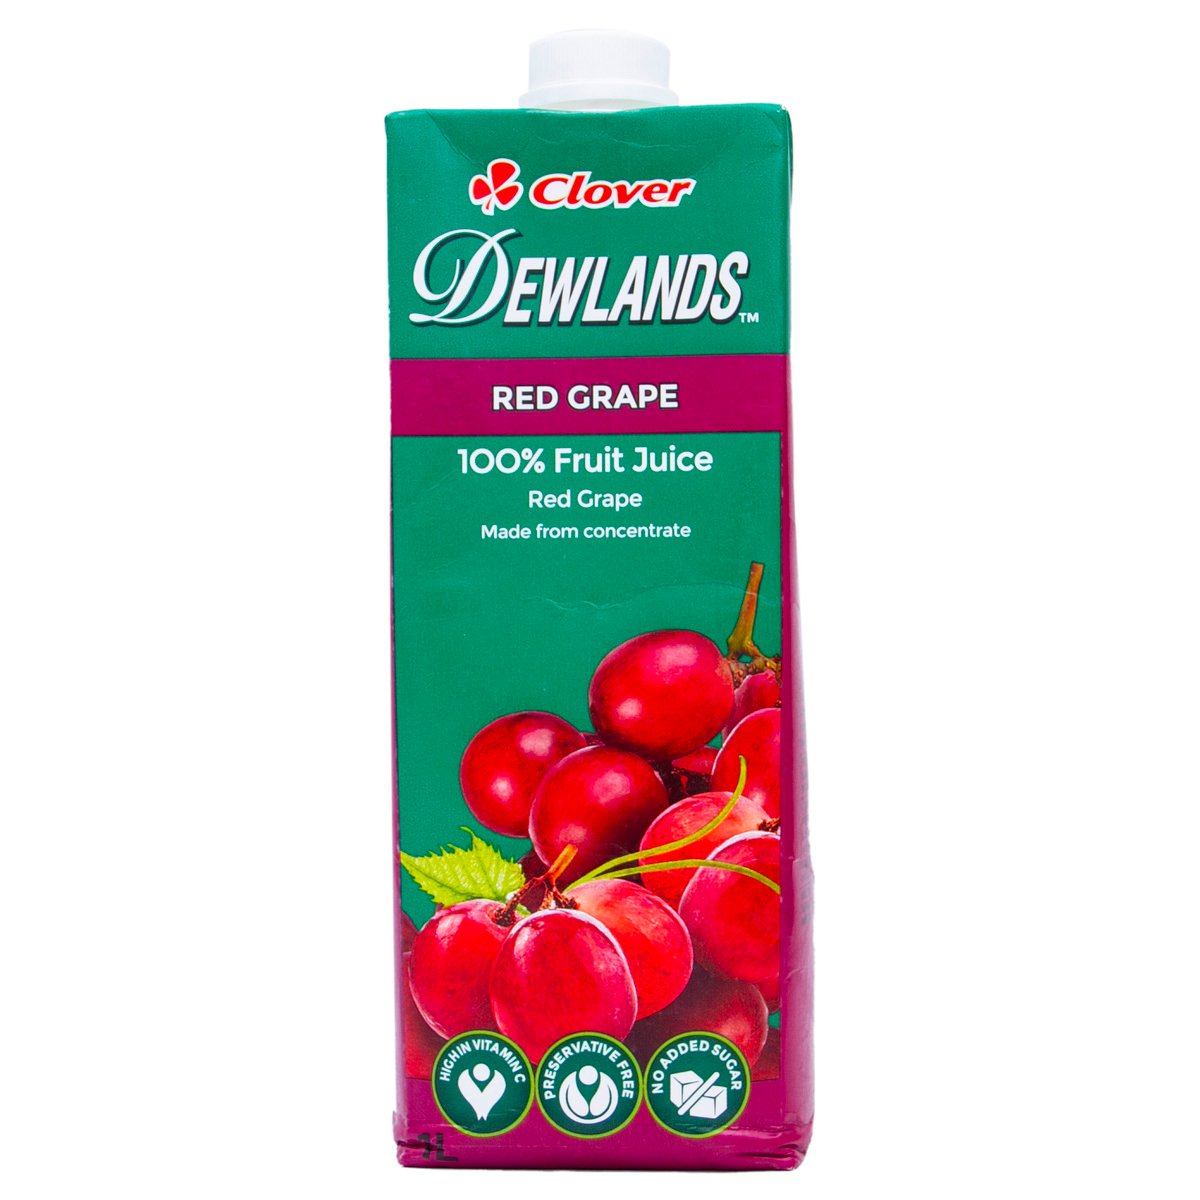 Dewlands Red Grape Juice 1 Litre